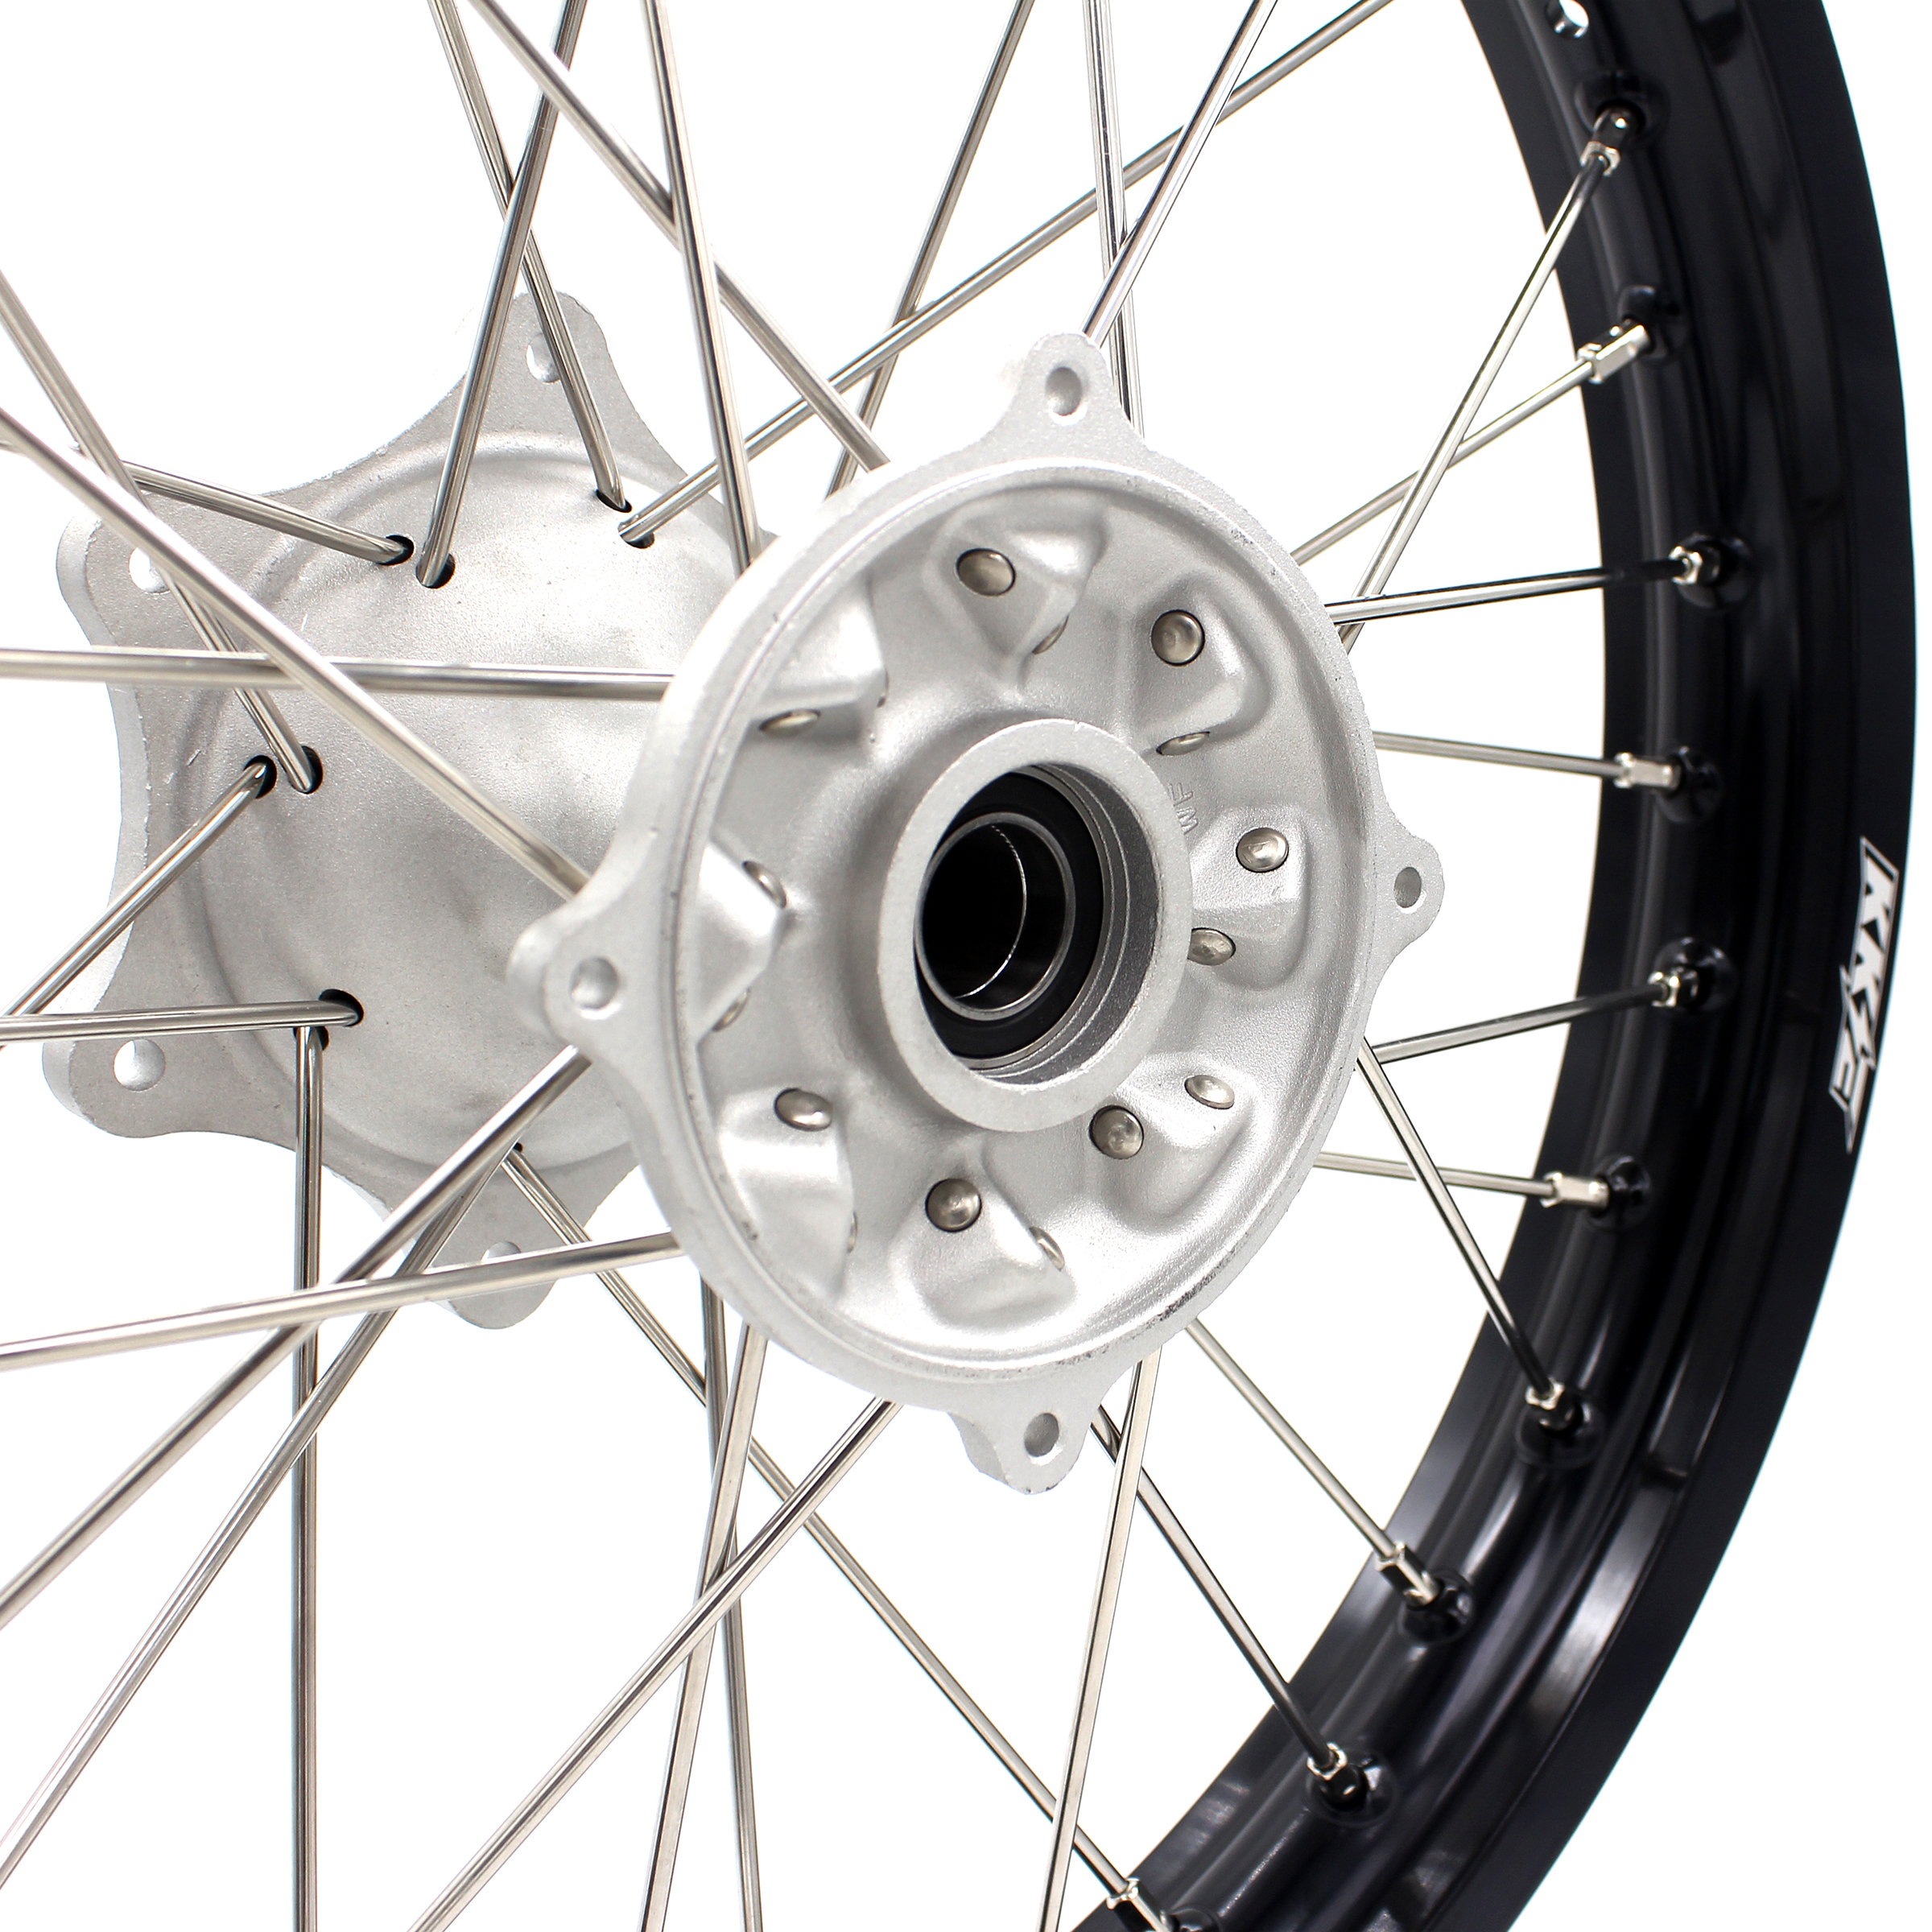 KKE 21/19 MX Motorcycle Wheels Rim Set Fit HONDA CRF250R 2014-2024 CRF450R  2013-2024 Silver Casting Hub